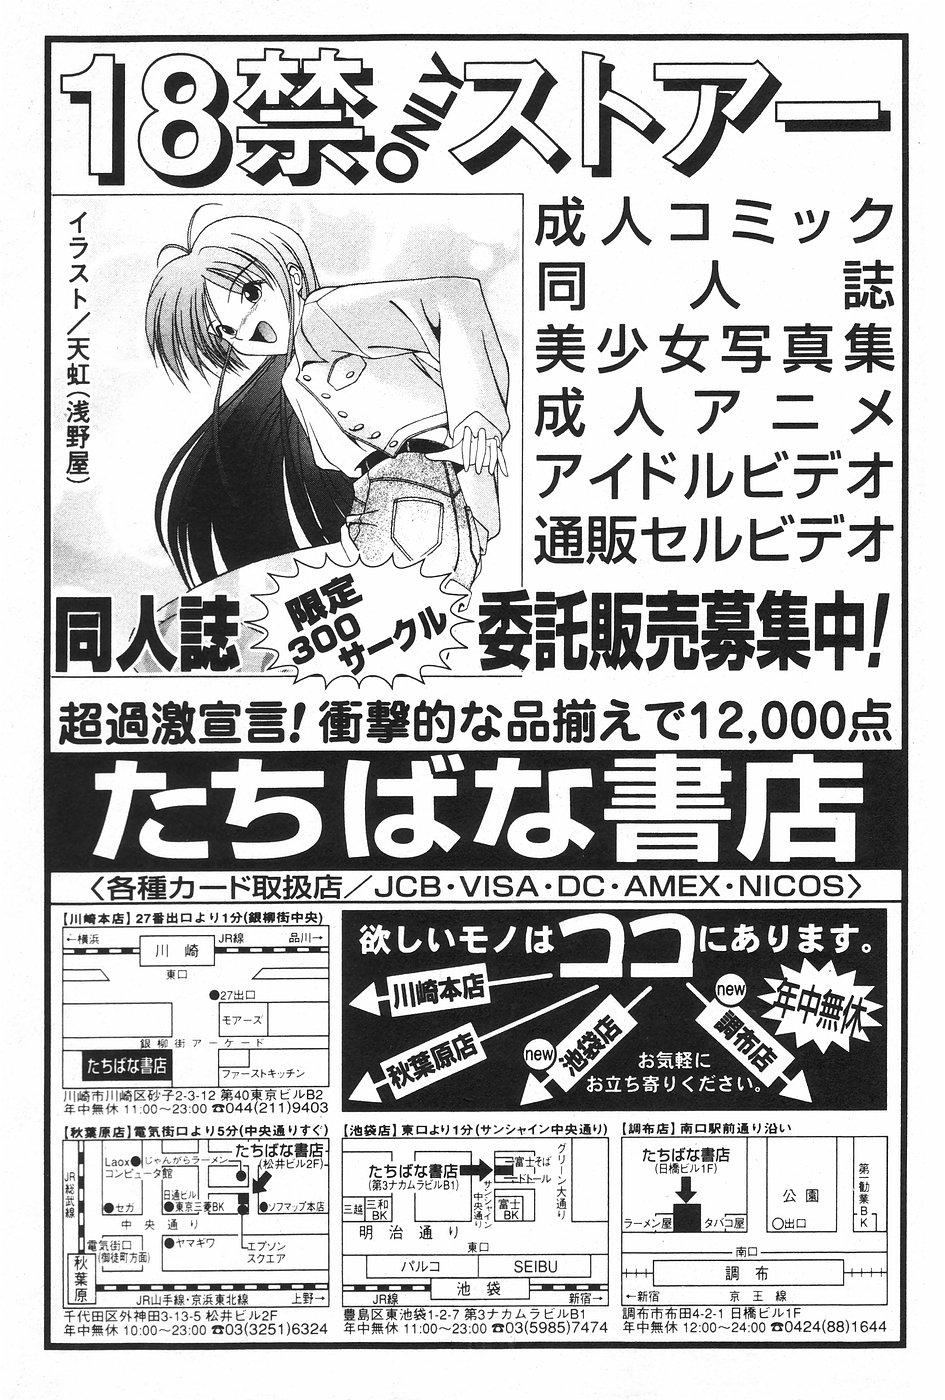 Manga Hotmilk 1997-04 152